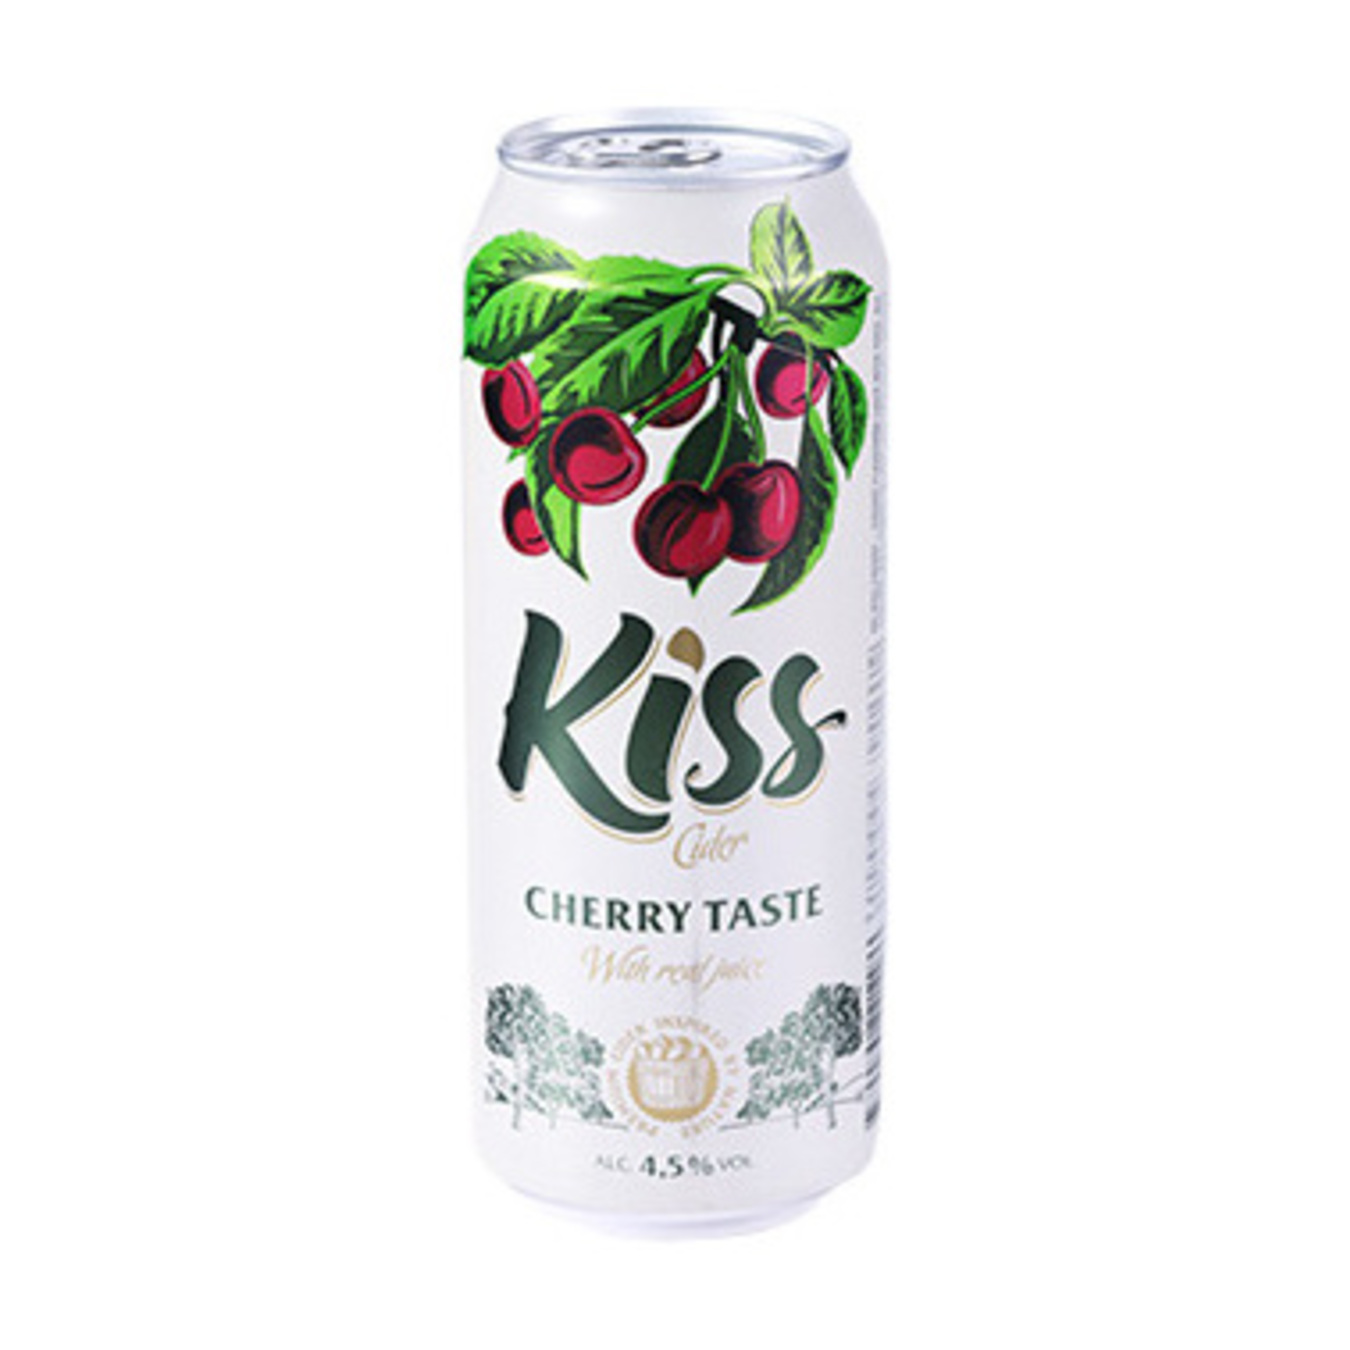 Сидр Kiss со вкусом вишни пастеризованный 4,5% 0,5л